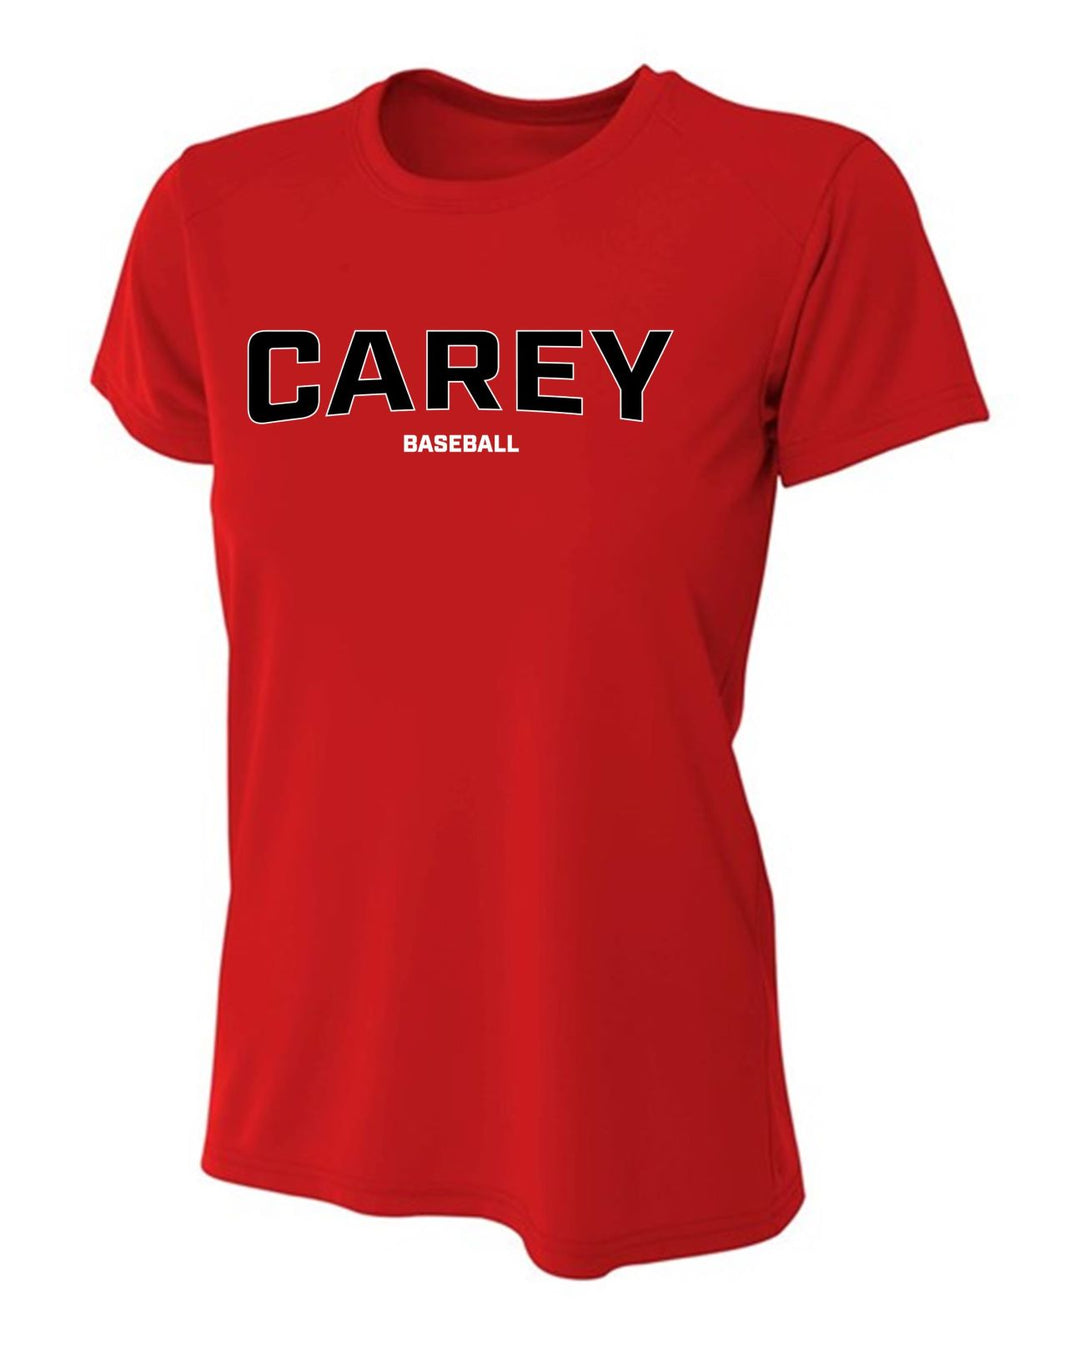 WCU Baseball Women's Short-Sleeve Performance Shirt WCU Baseball Red CAREY - Third Coast Soccer